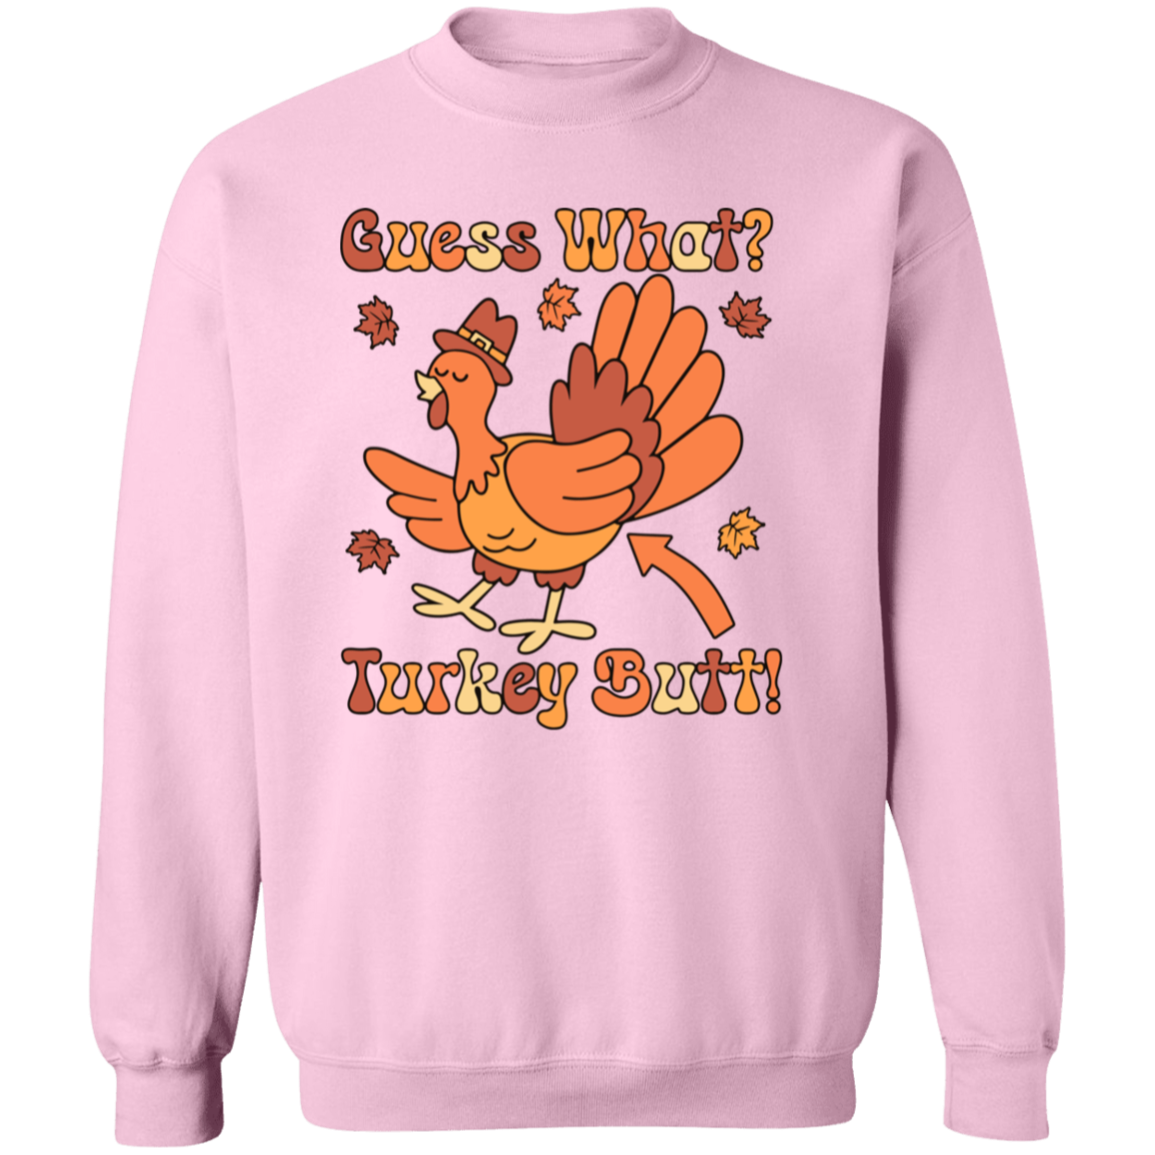 Guess What? Turkey Butt! Sweatshirt